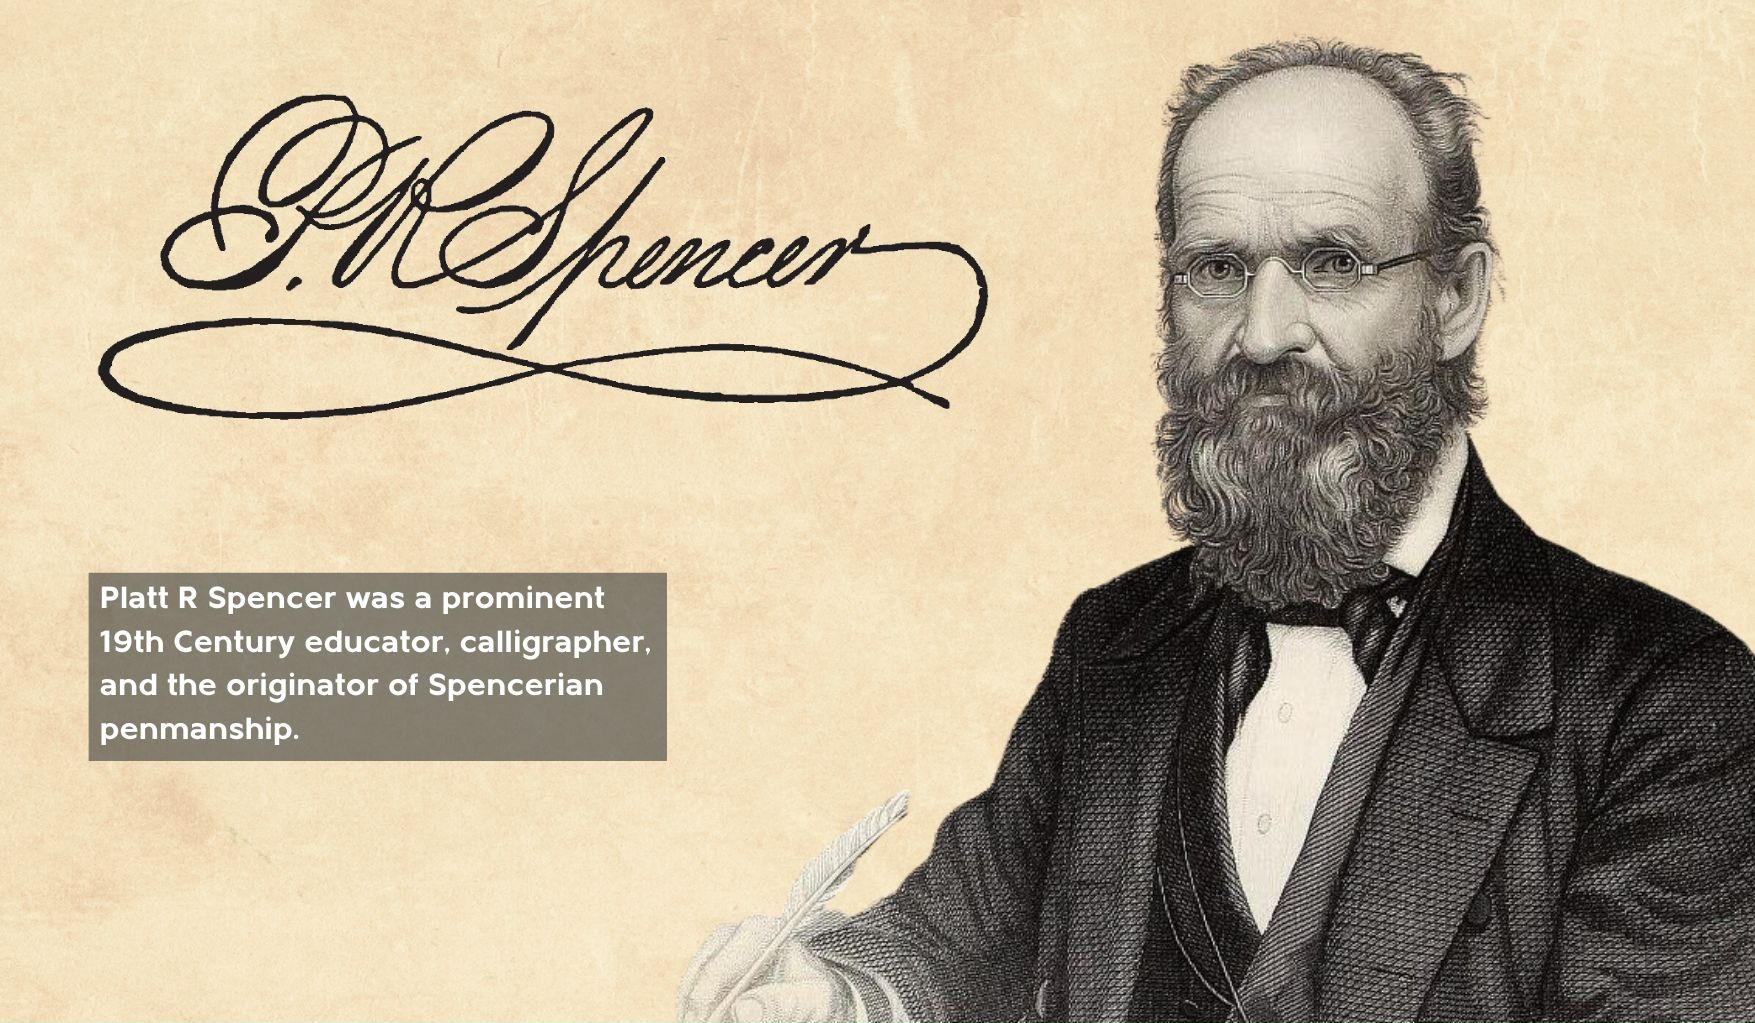 Image of Platt R Spencer, prominent 19th Century educator, calligrapher, and the originator of Spencerian penmanship.